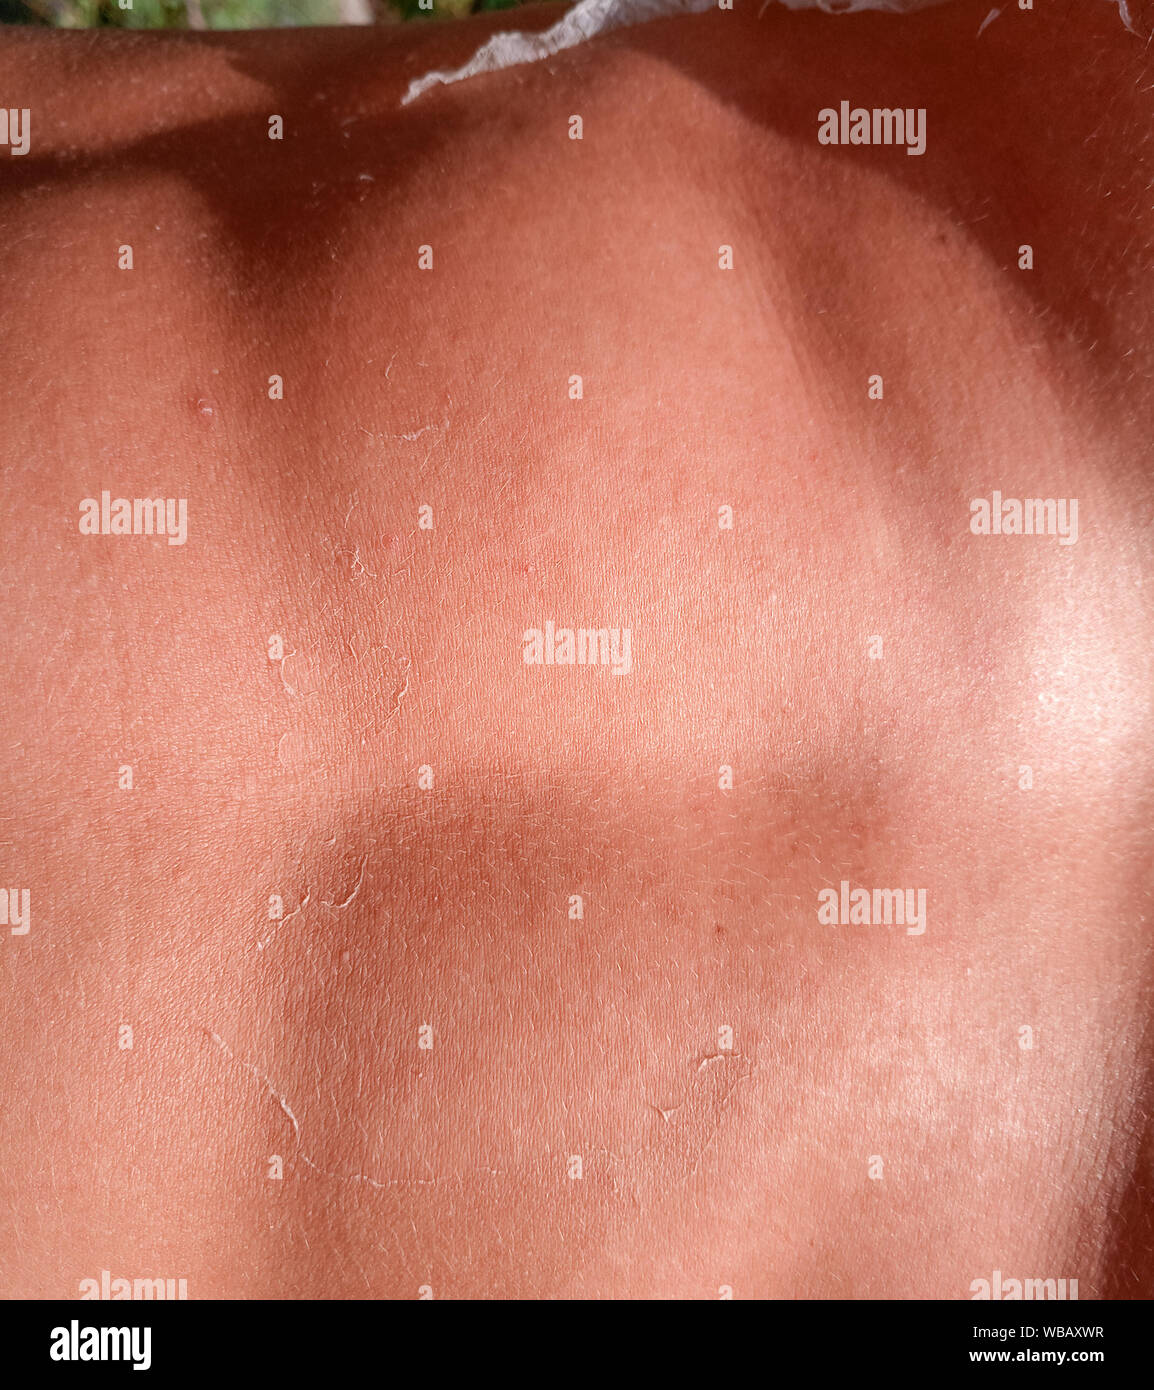 The effects of sunburn on the skin. Climb skin. Stock Photo